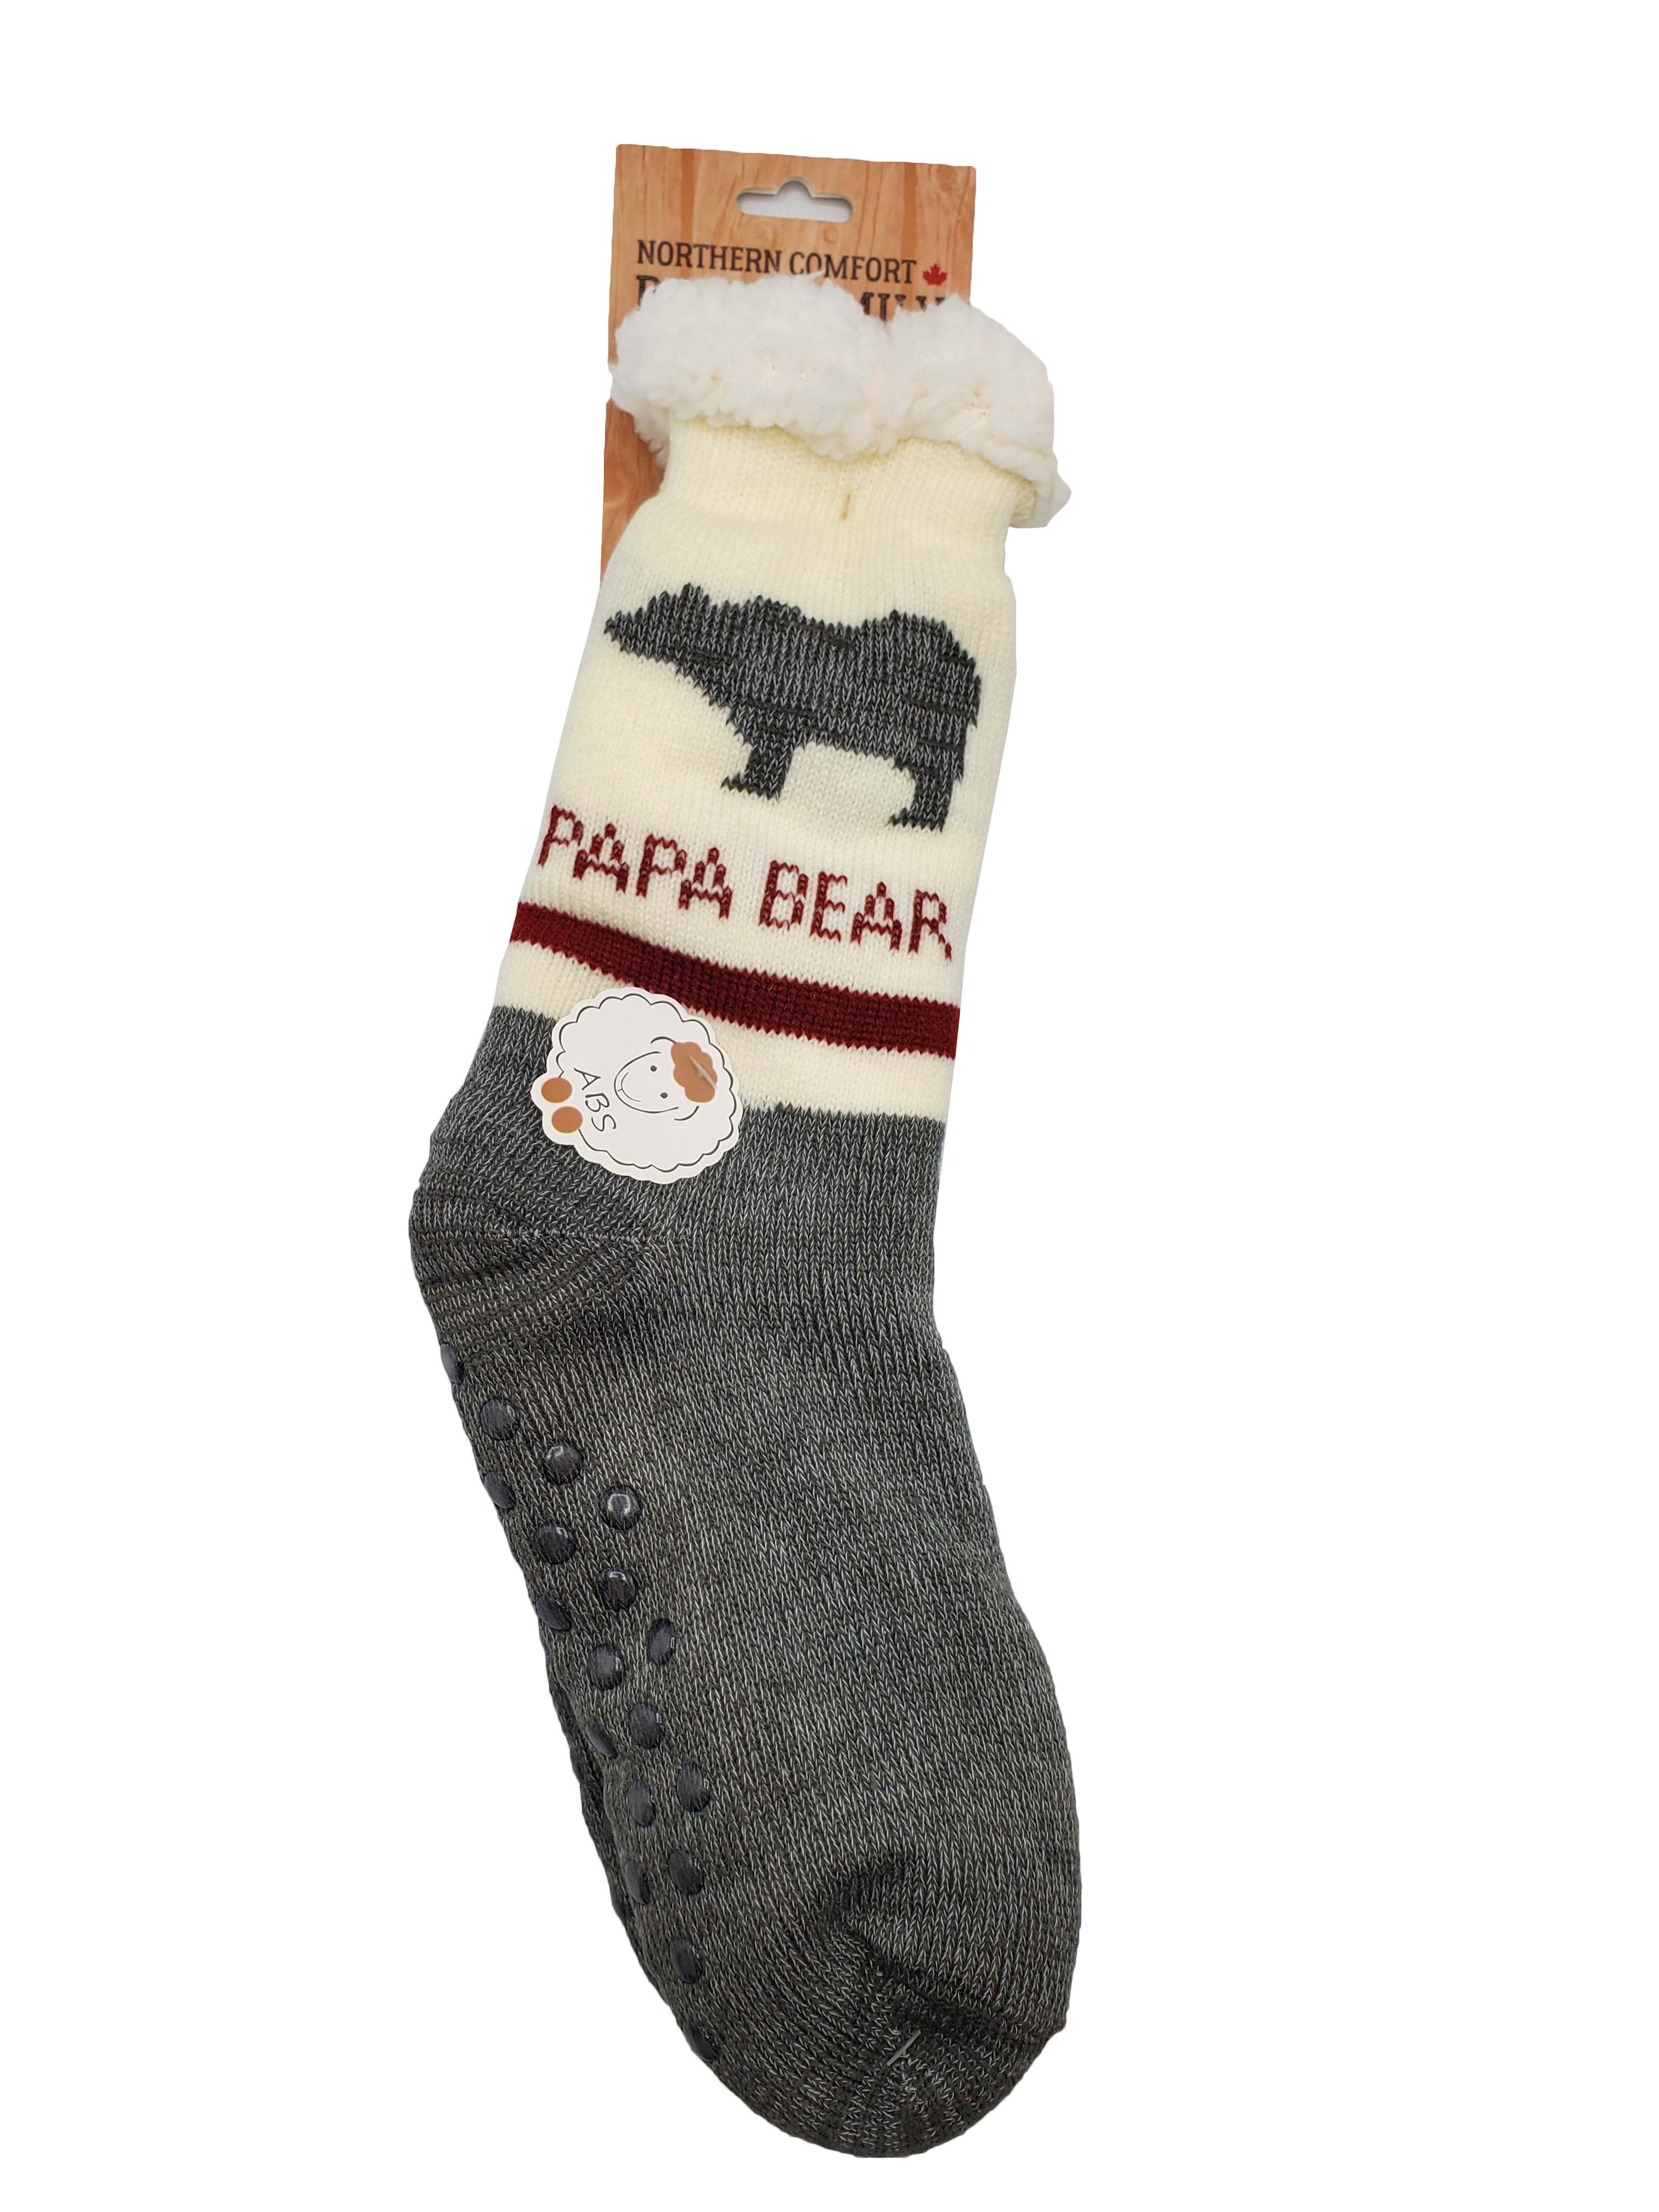 Northern Comfort Papa Bear Sherpa-Lined Men's Slipper Socks with